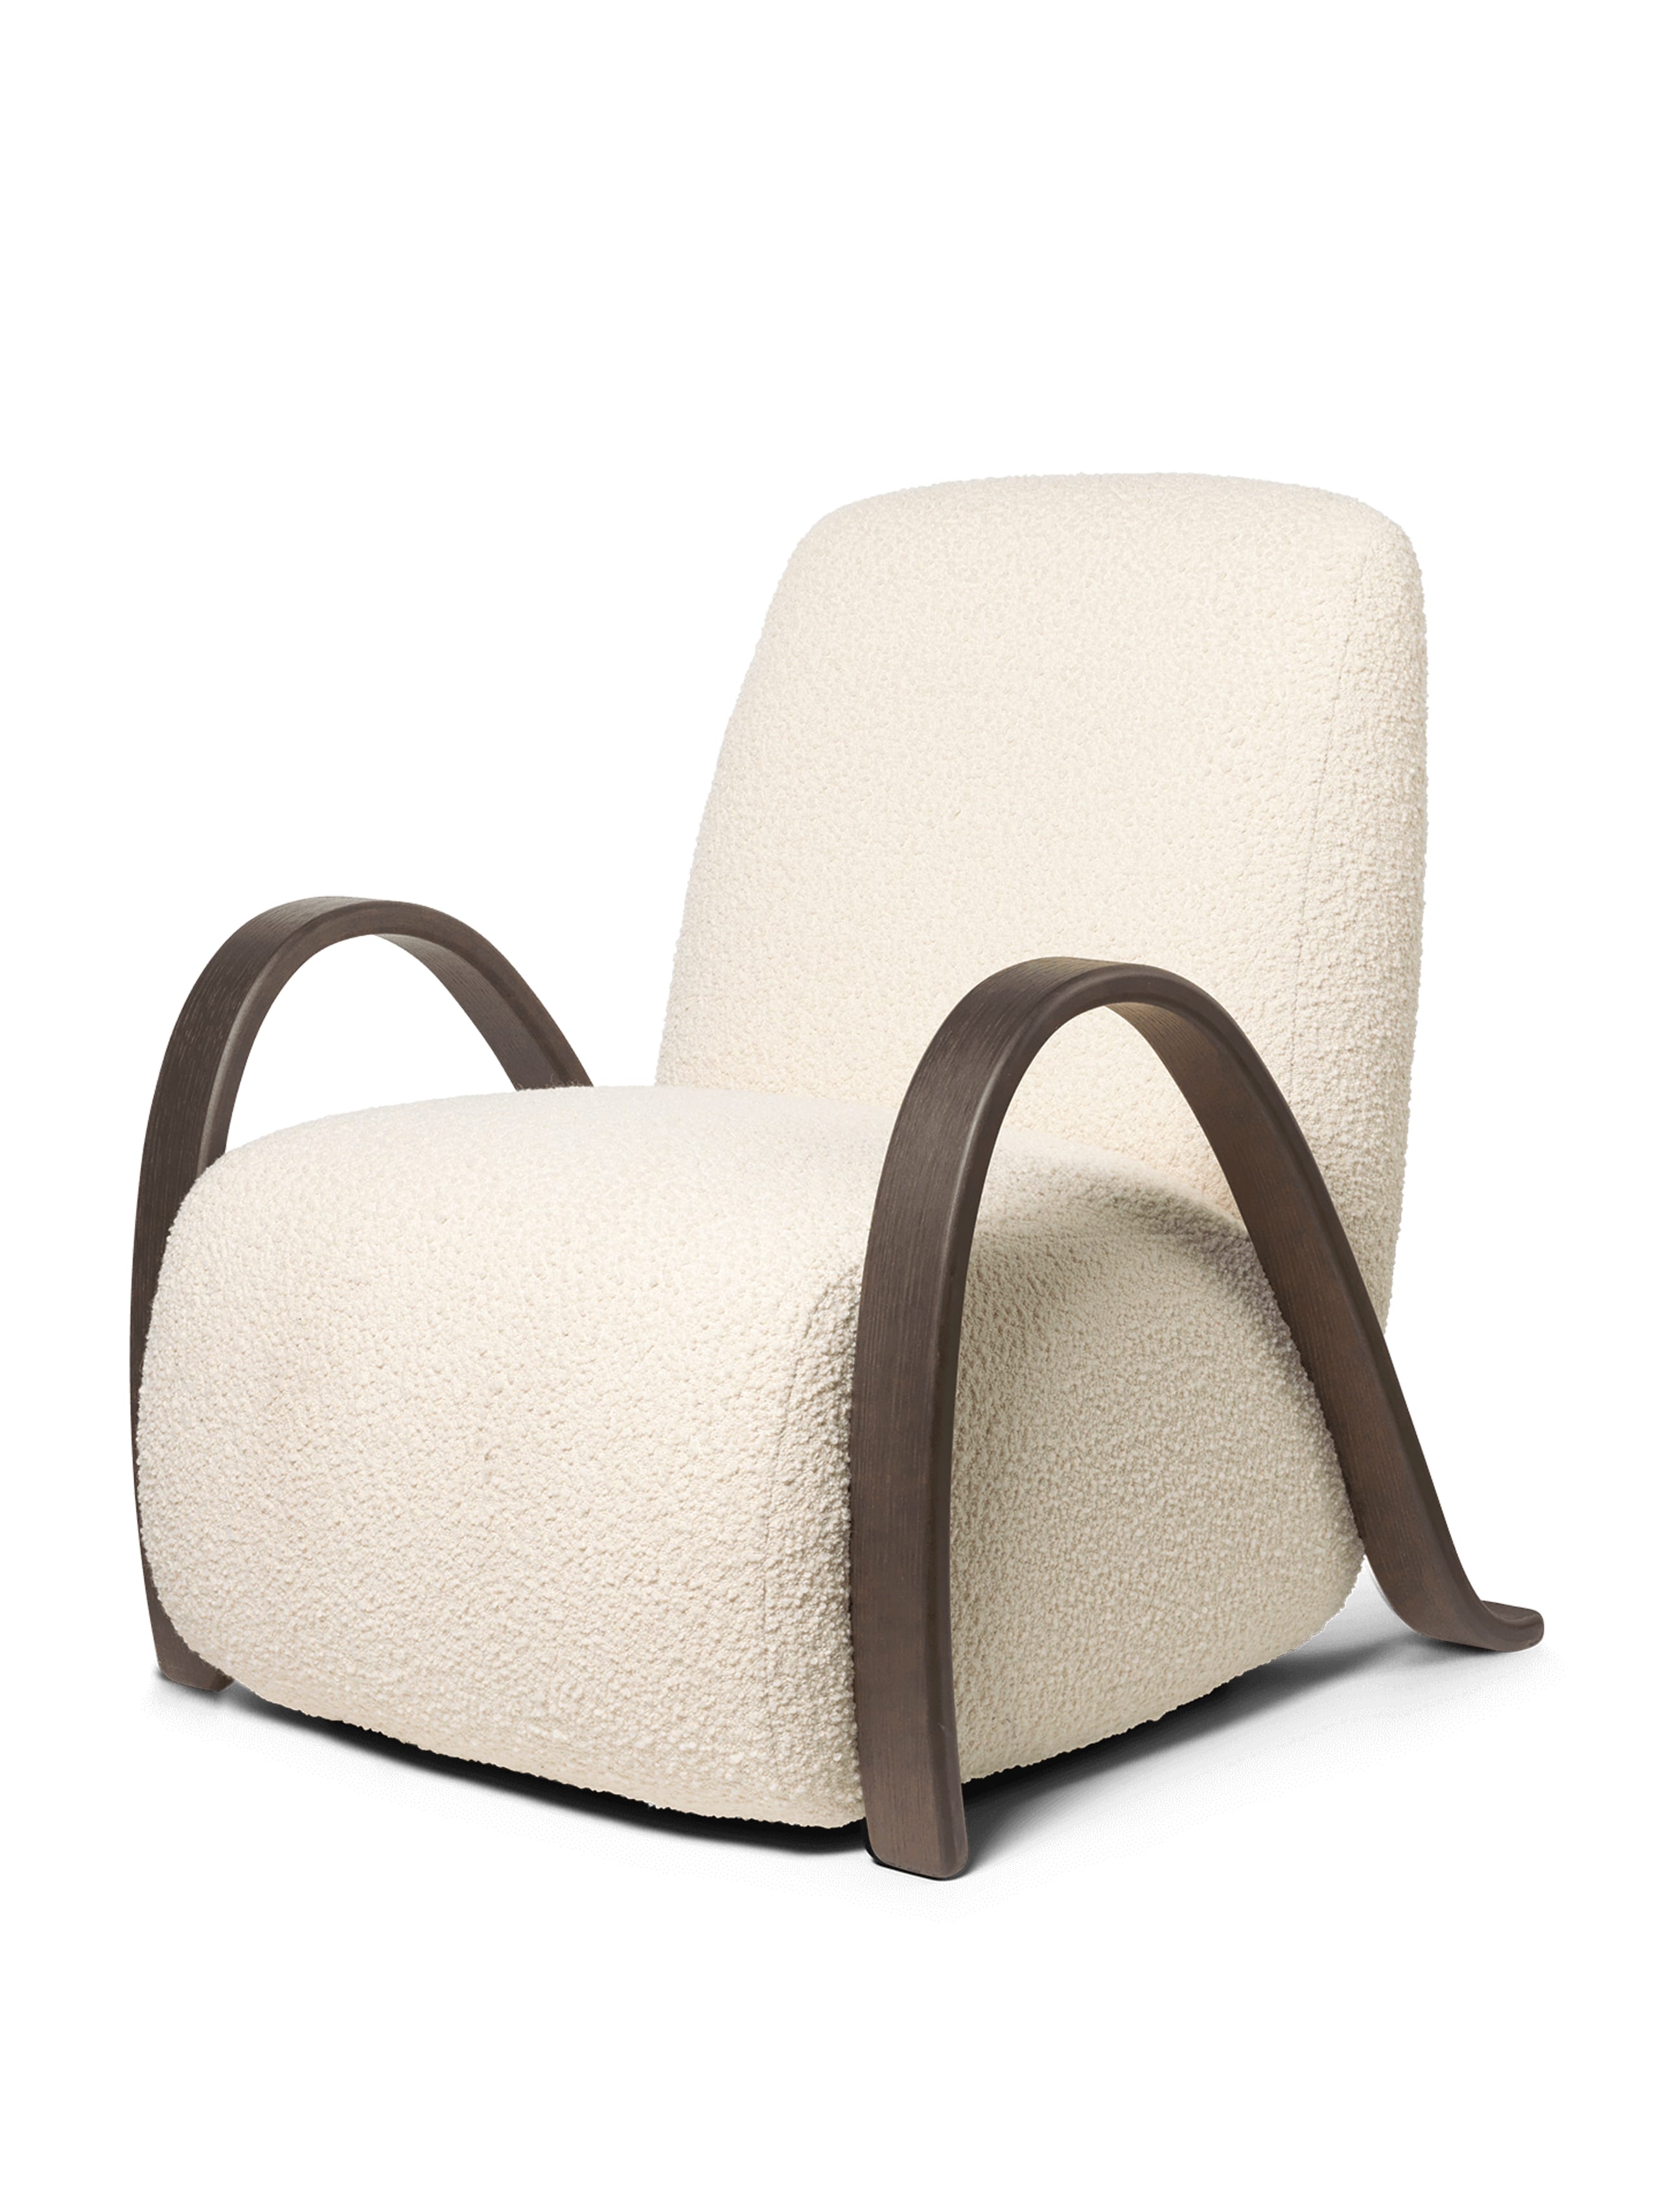 Ferm Living - Loungestol - Buur Lounge Chair - Buur Lounge Chair Nordic Bouclé - Off-white